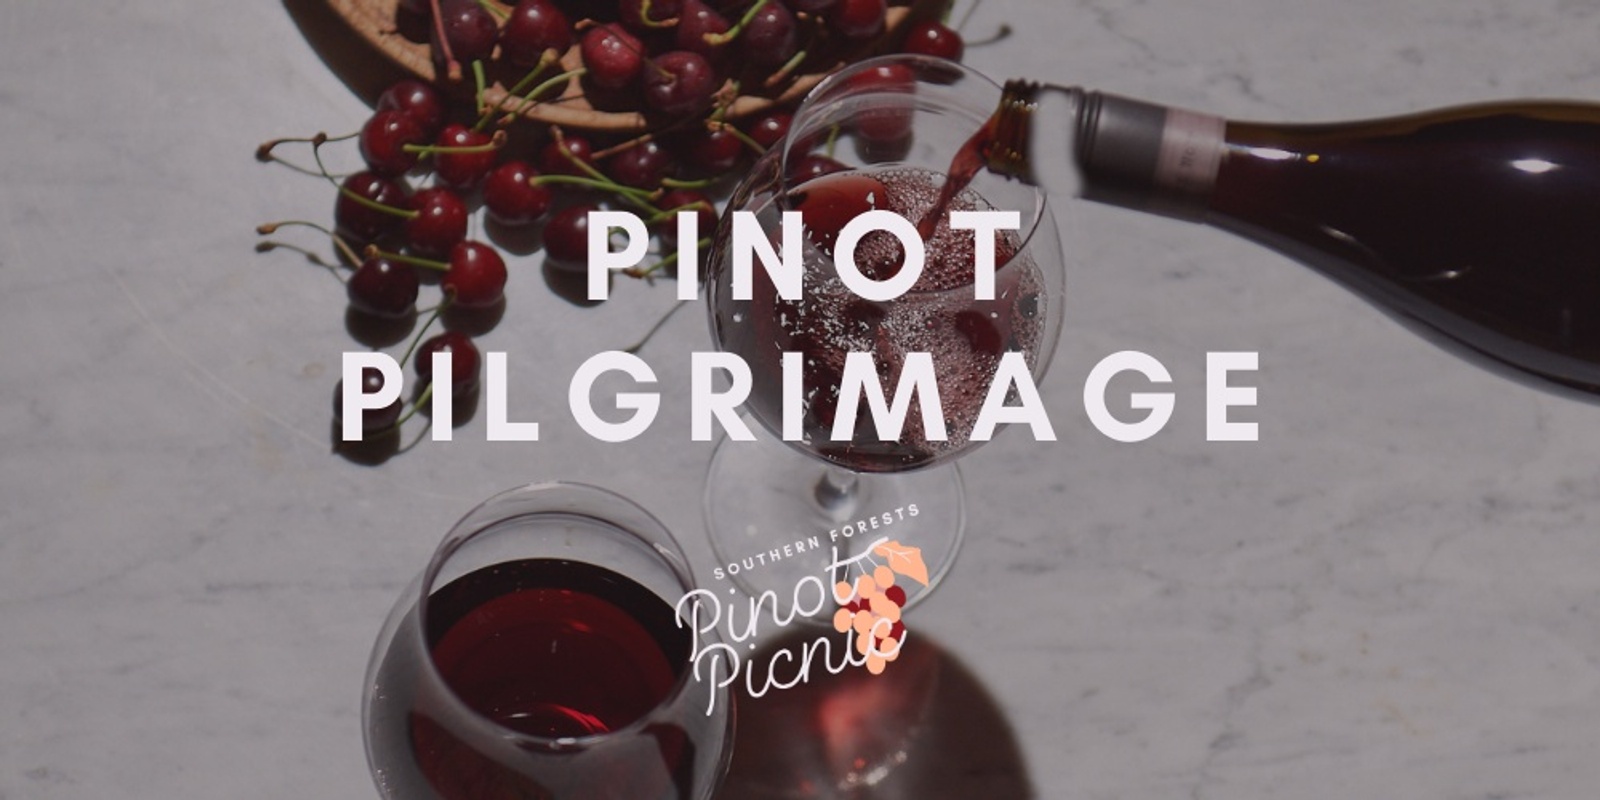 Banner image for Pinot Pilgrimage | Pinot Picnic